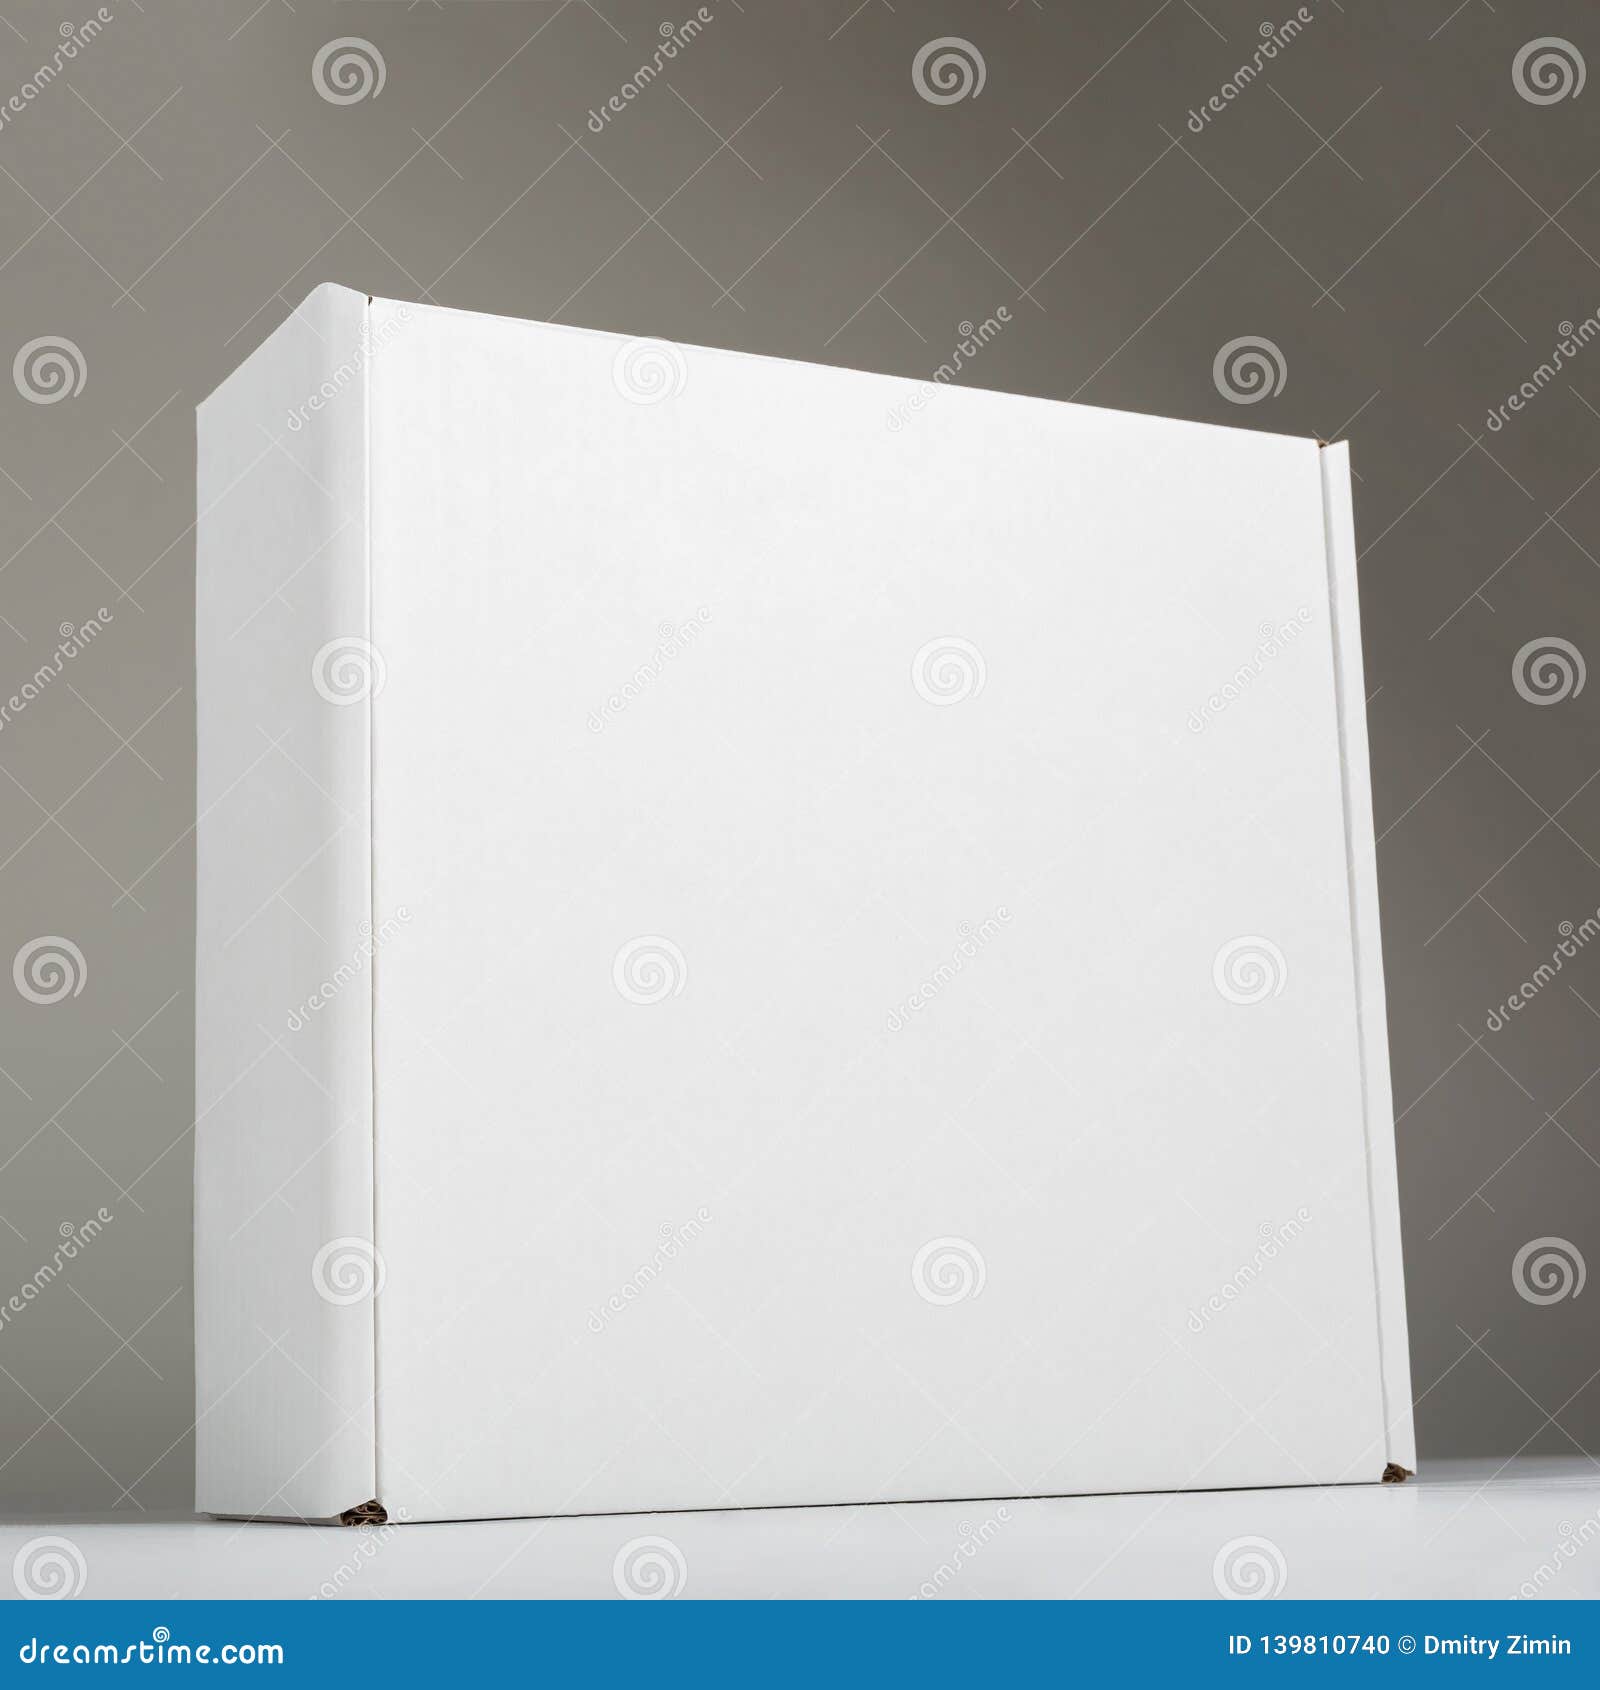 Download Mockup White Cardboard Box For Identity Disign Stock Photo ...